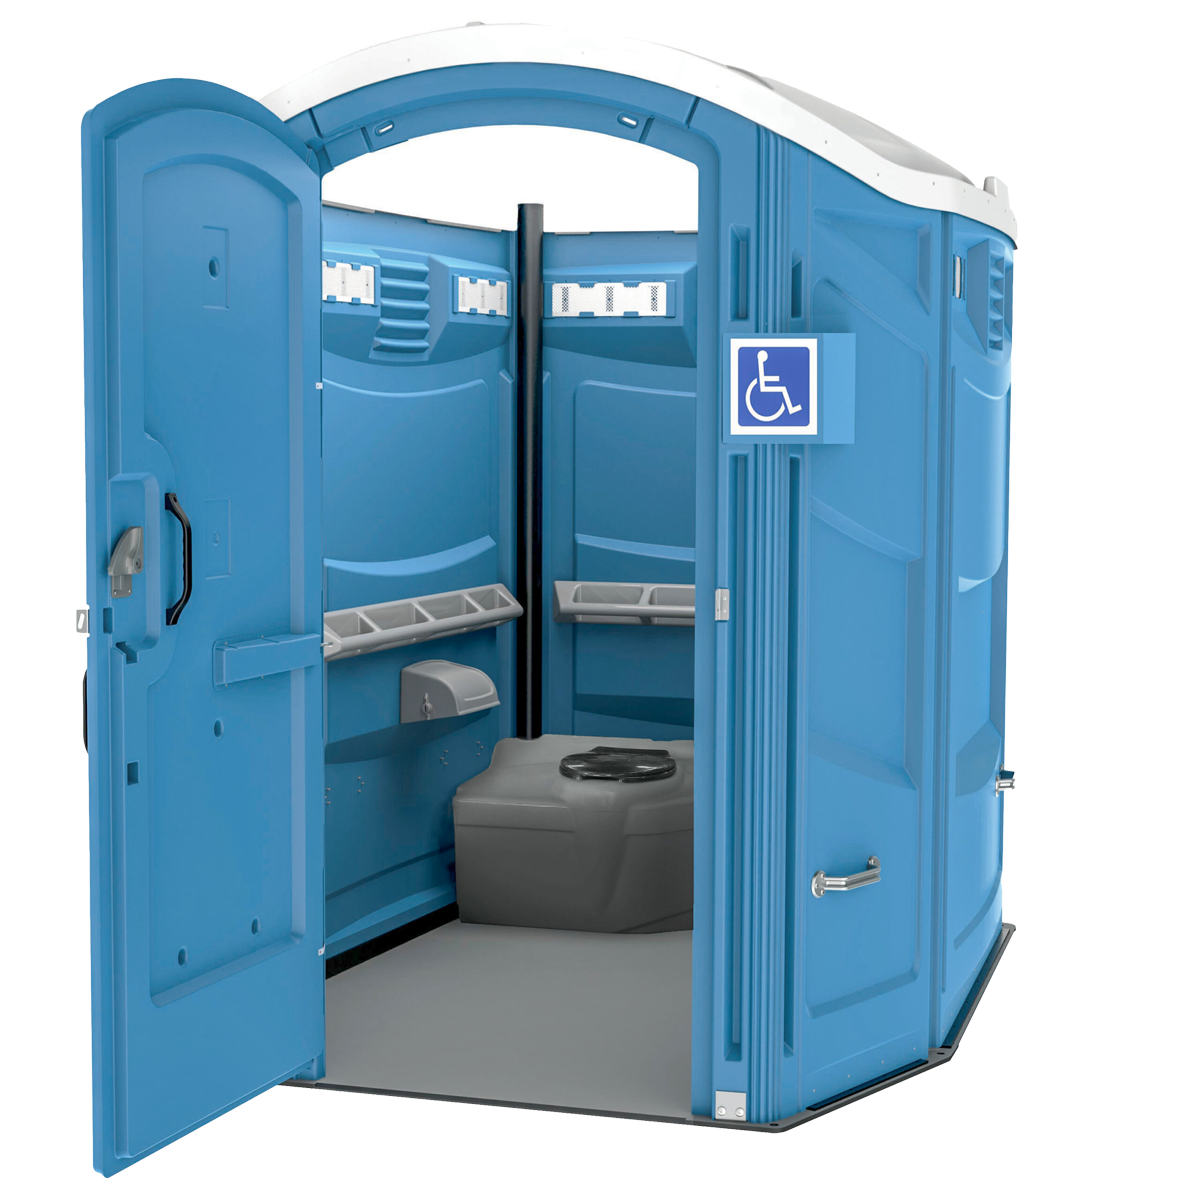 Cleanpot Portable Toilet Rentals